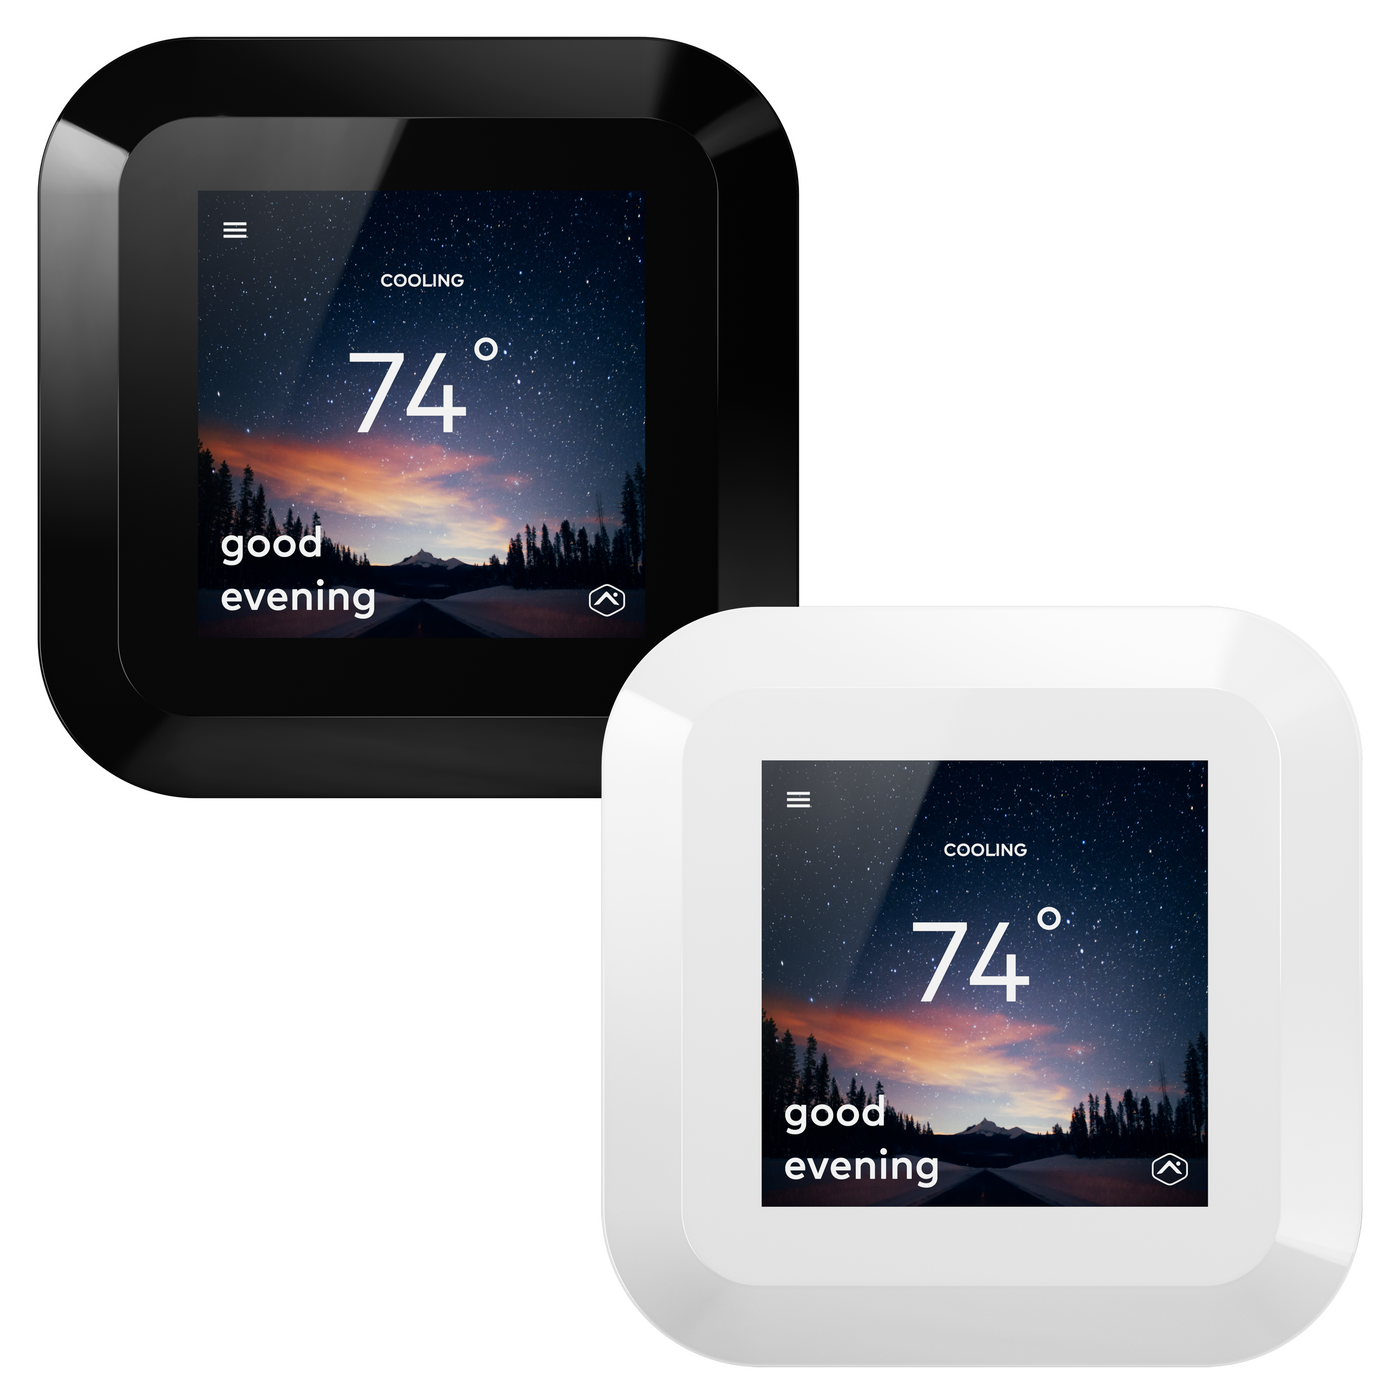 Alarm.com Smart Thermostat HD - Color Touchscreen Display (Black Display)